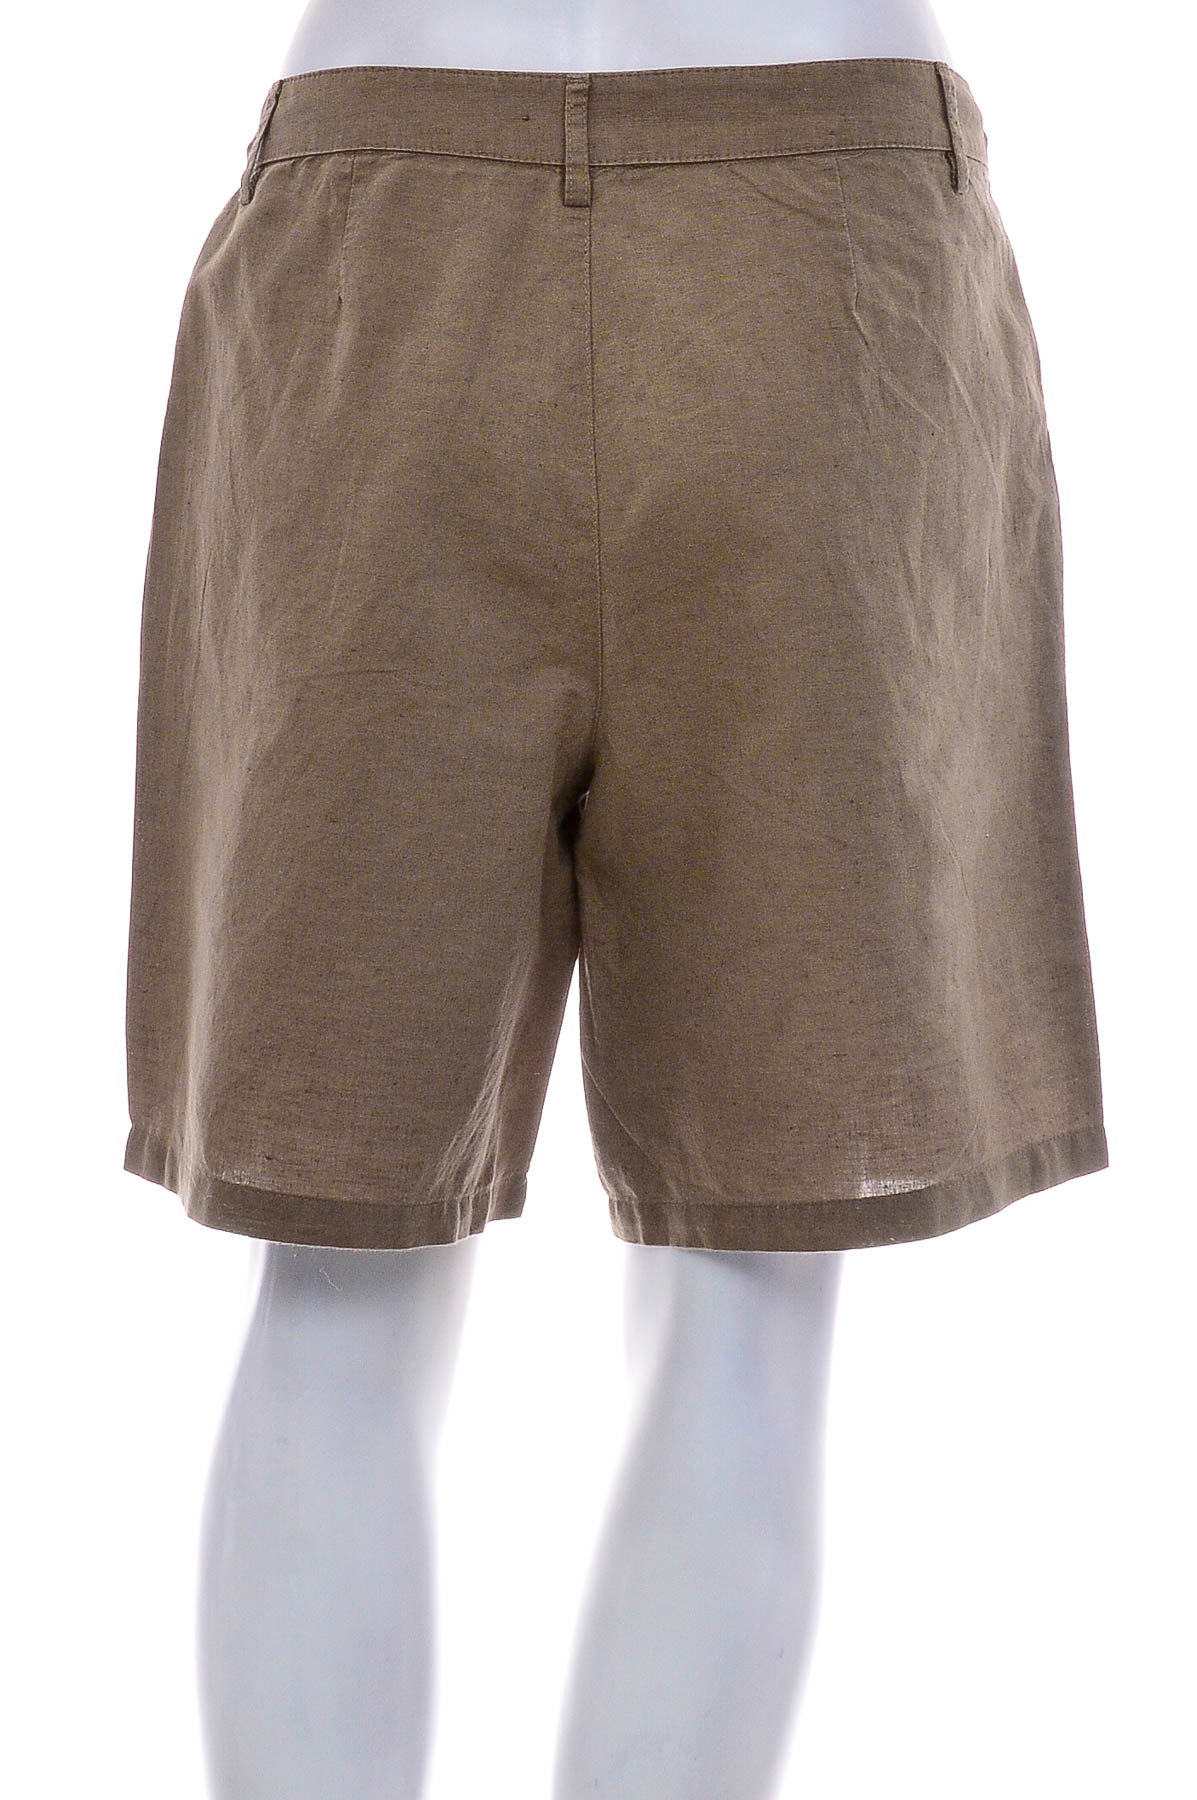 Female shorts - Stile Benetton - 1